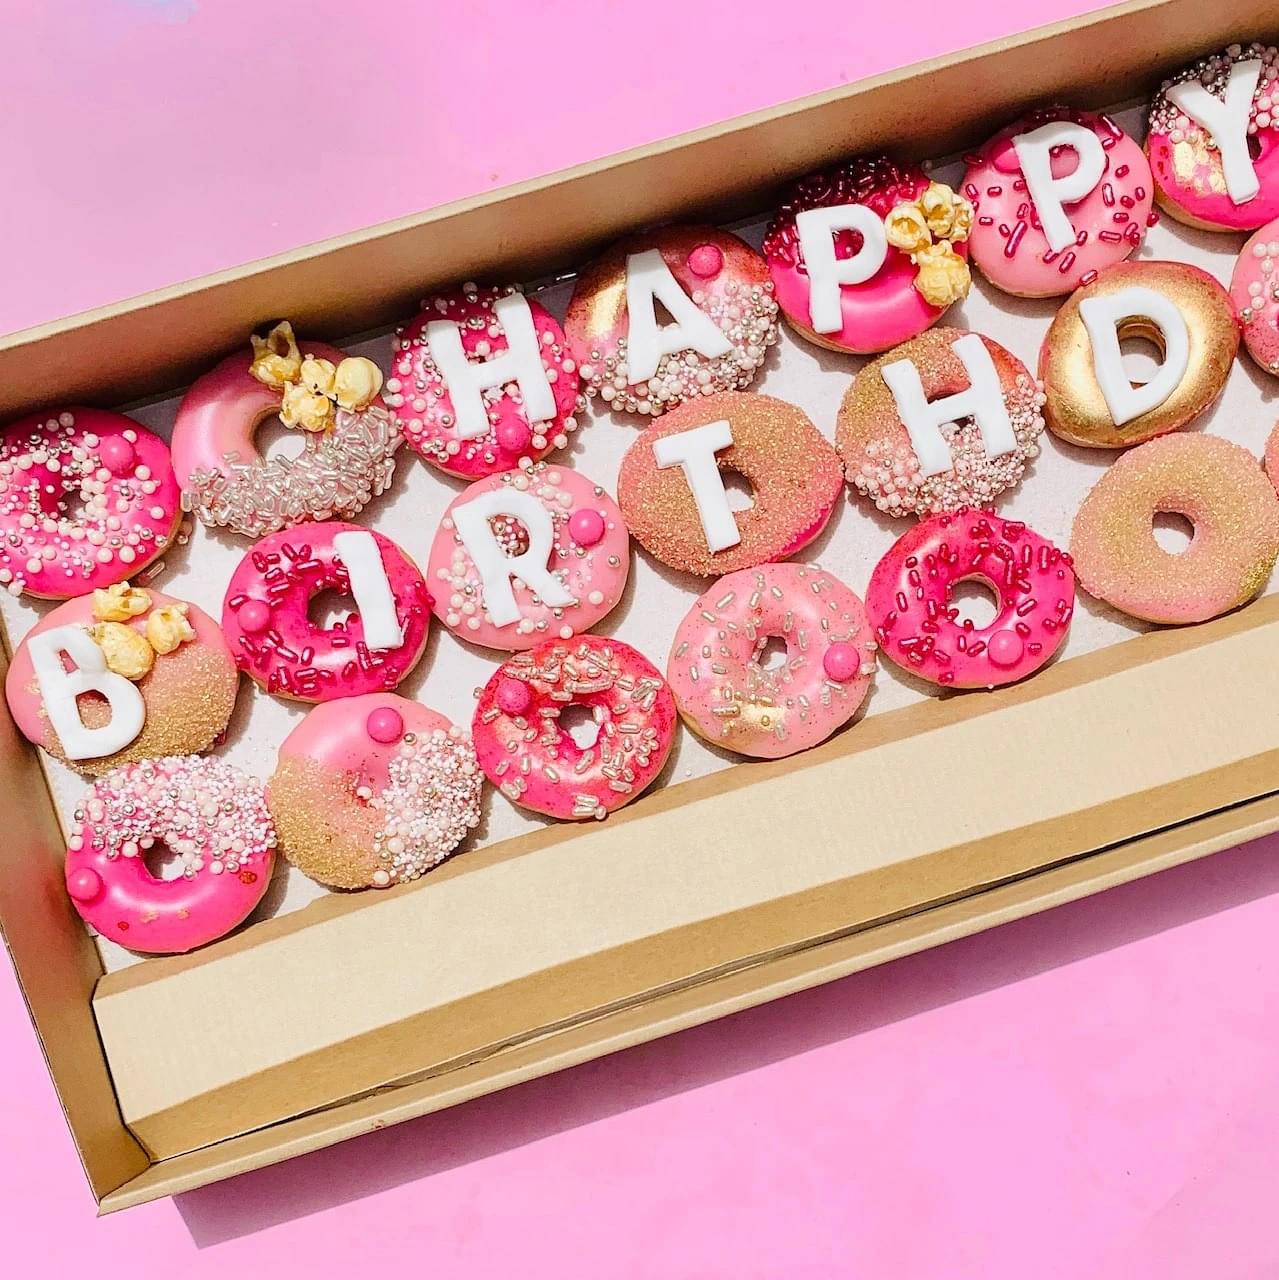 Happy Birthday Mini Donuts - Pretty in Pink